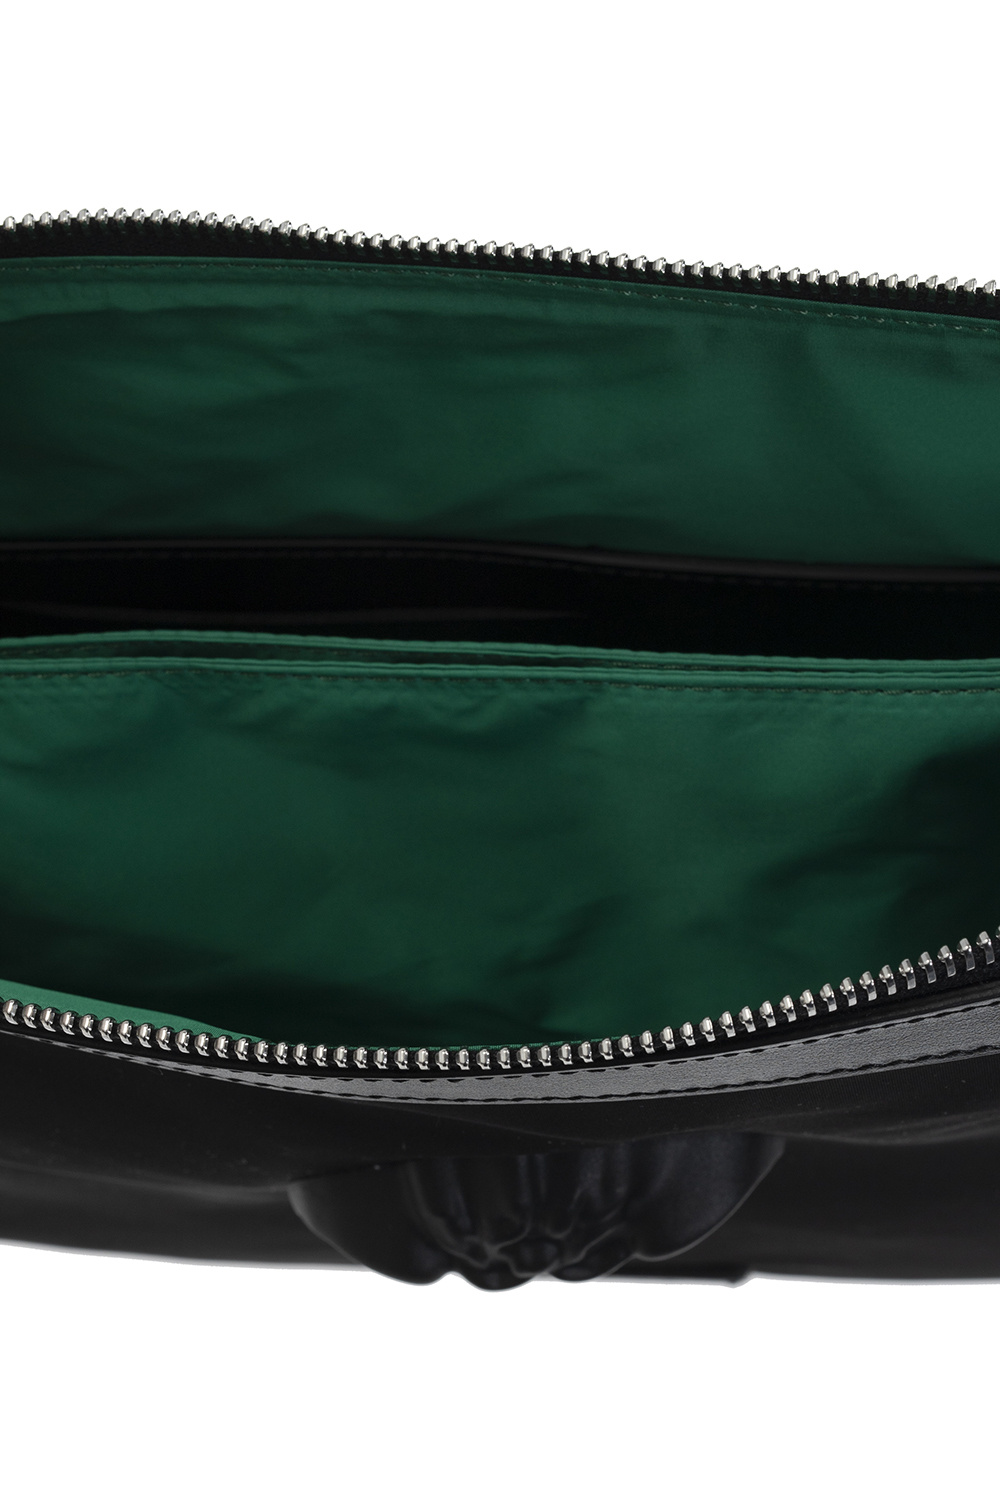 Versace Peep the latest range of backpacks